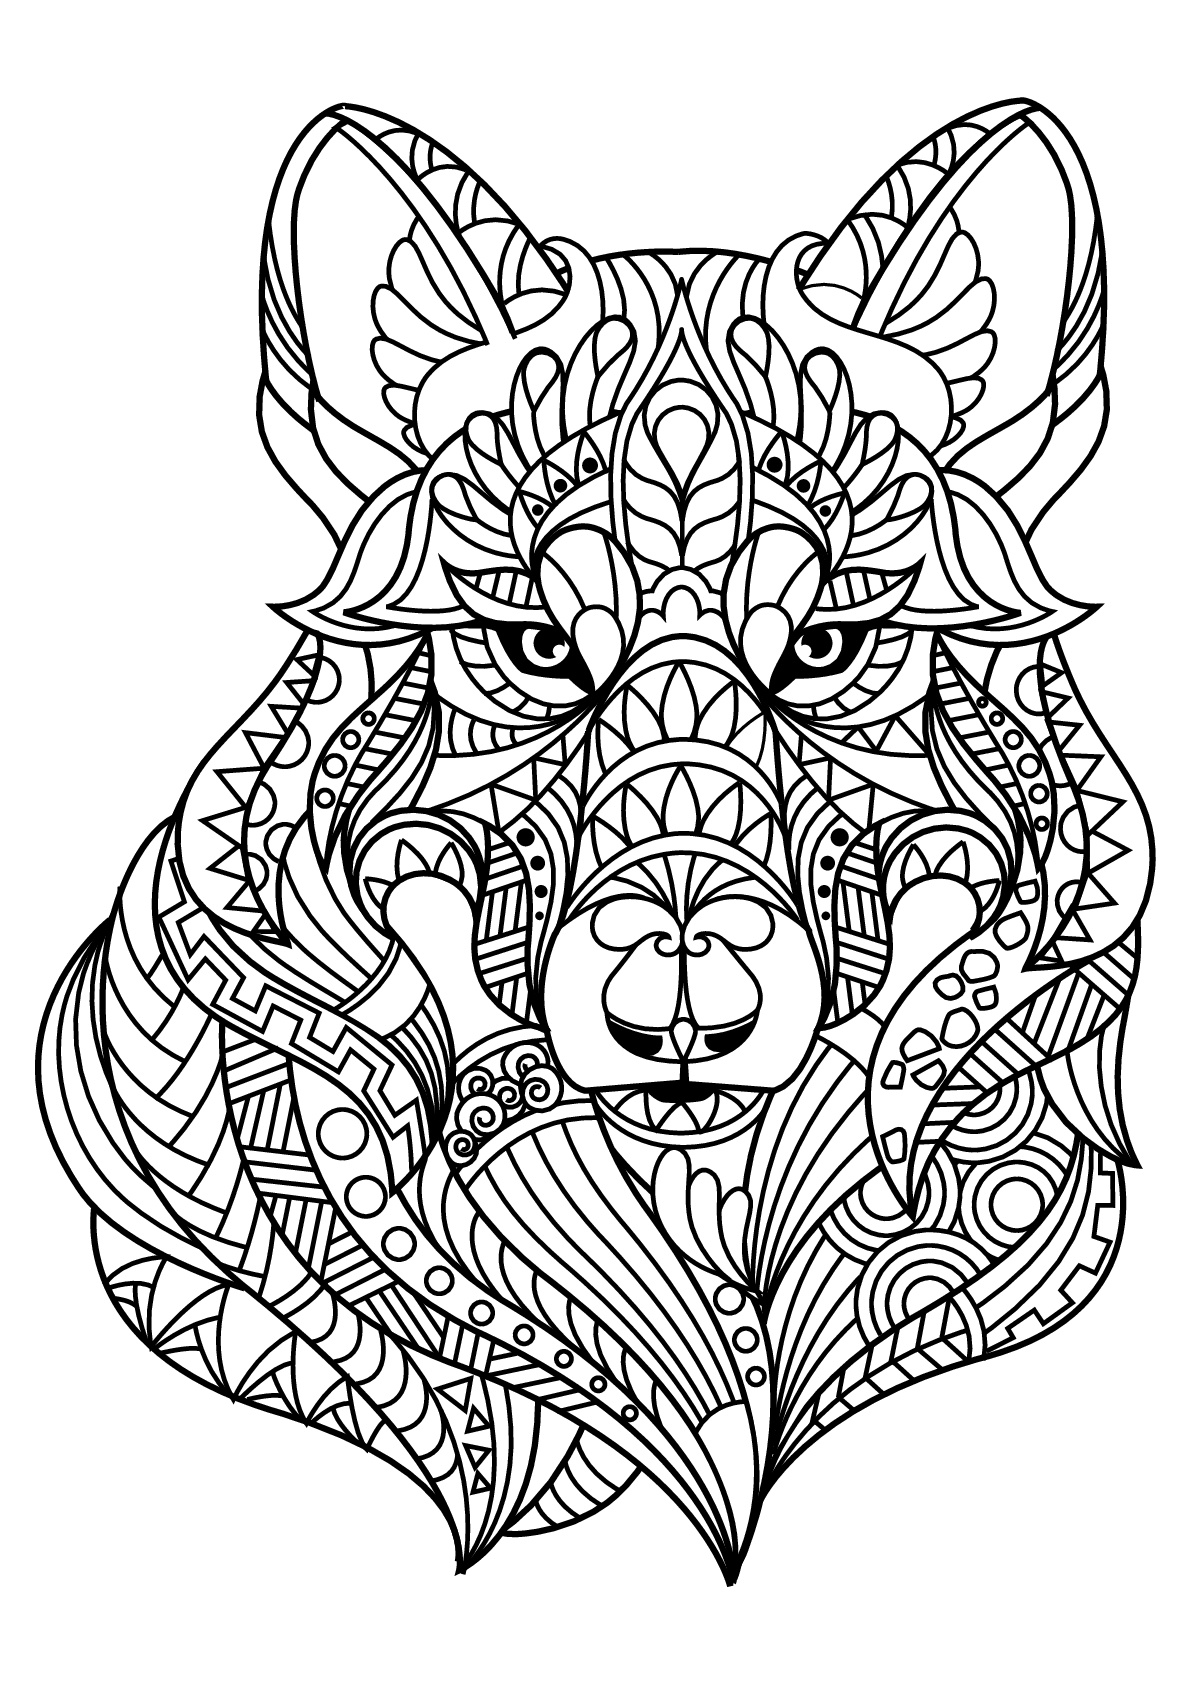 Desenhos para colorir gratuitos de Lobos para imprimir e colorir - Lobos -  Coloring Pages for Adults